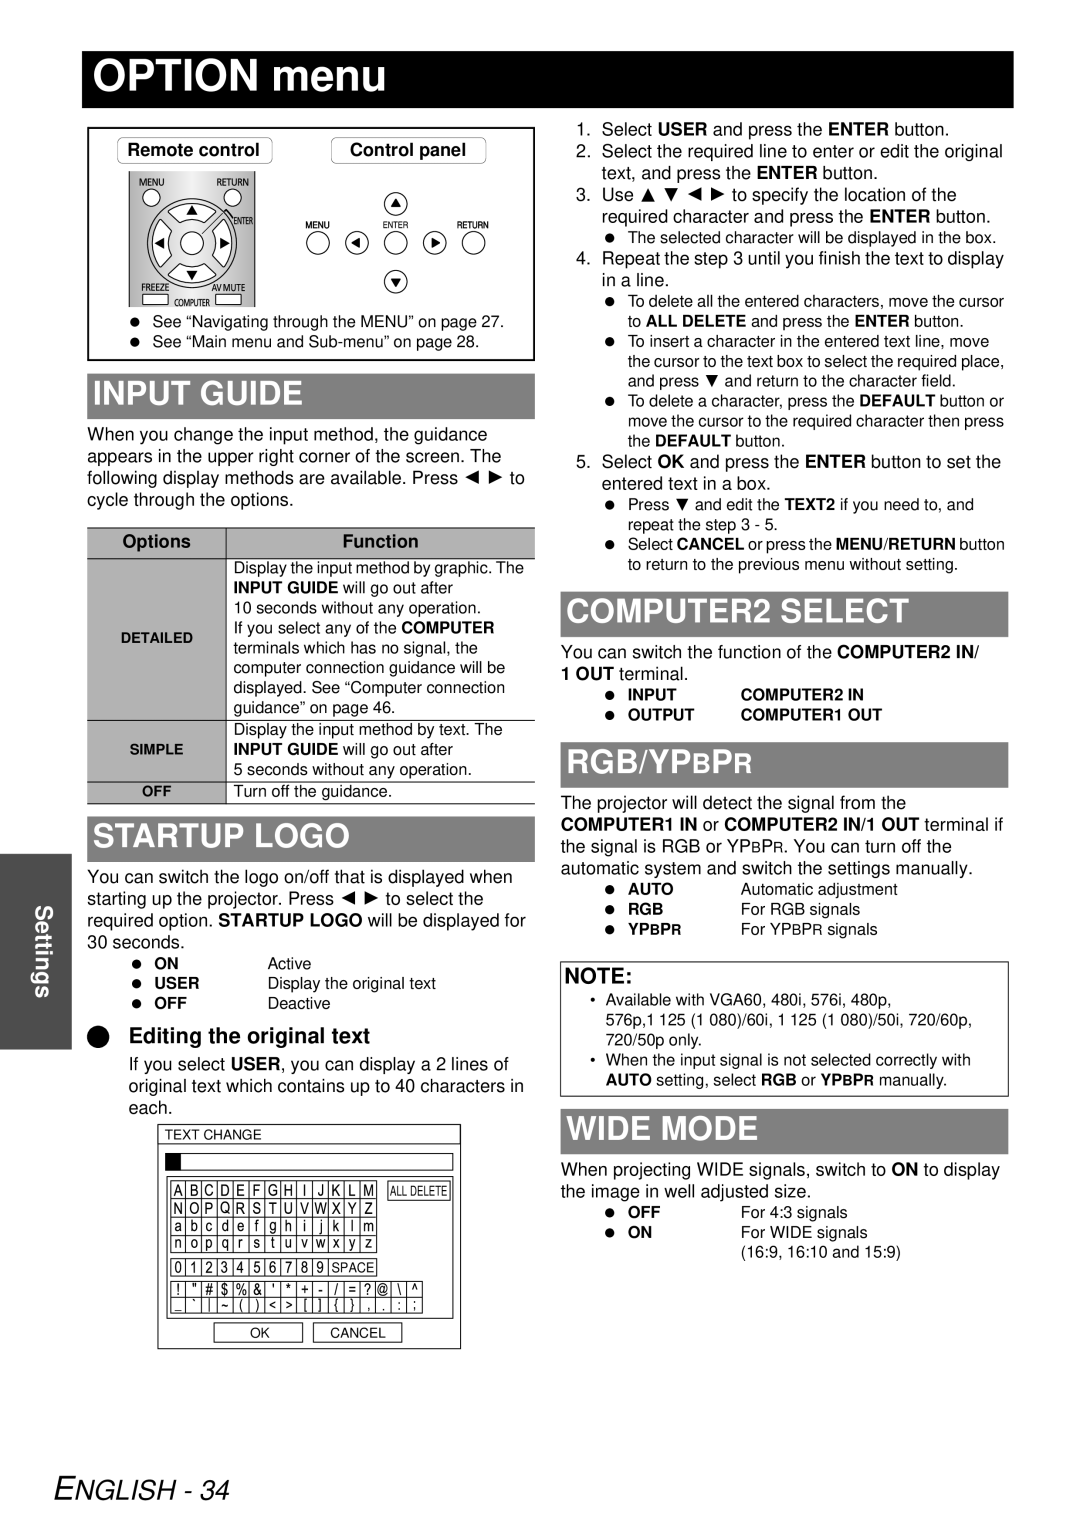 Panasonic PT-LB78U manual OPTION menu, Input Guide, Startup Logo, COMPUTER2 SELECT, Rgb/Ypbpr, Wide Mode, English, Settings 